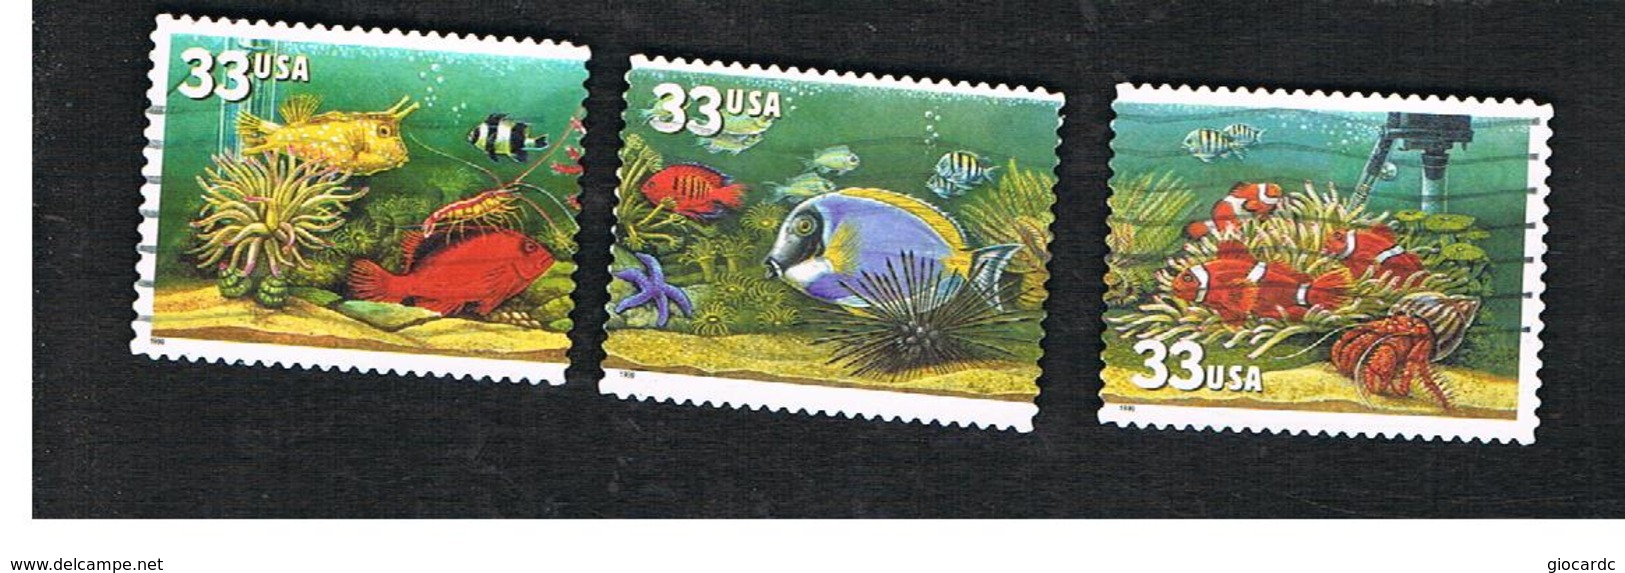 STATI UNITI (U.S.A.) - SG  3623.3626   - 1999   AQUARIUM FISHES   - USED - Used Stamps